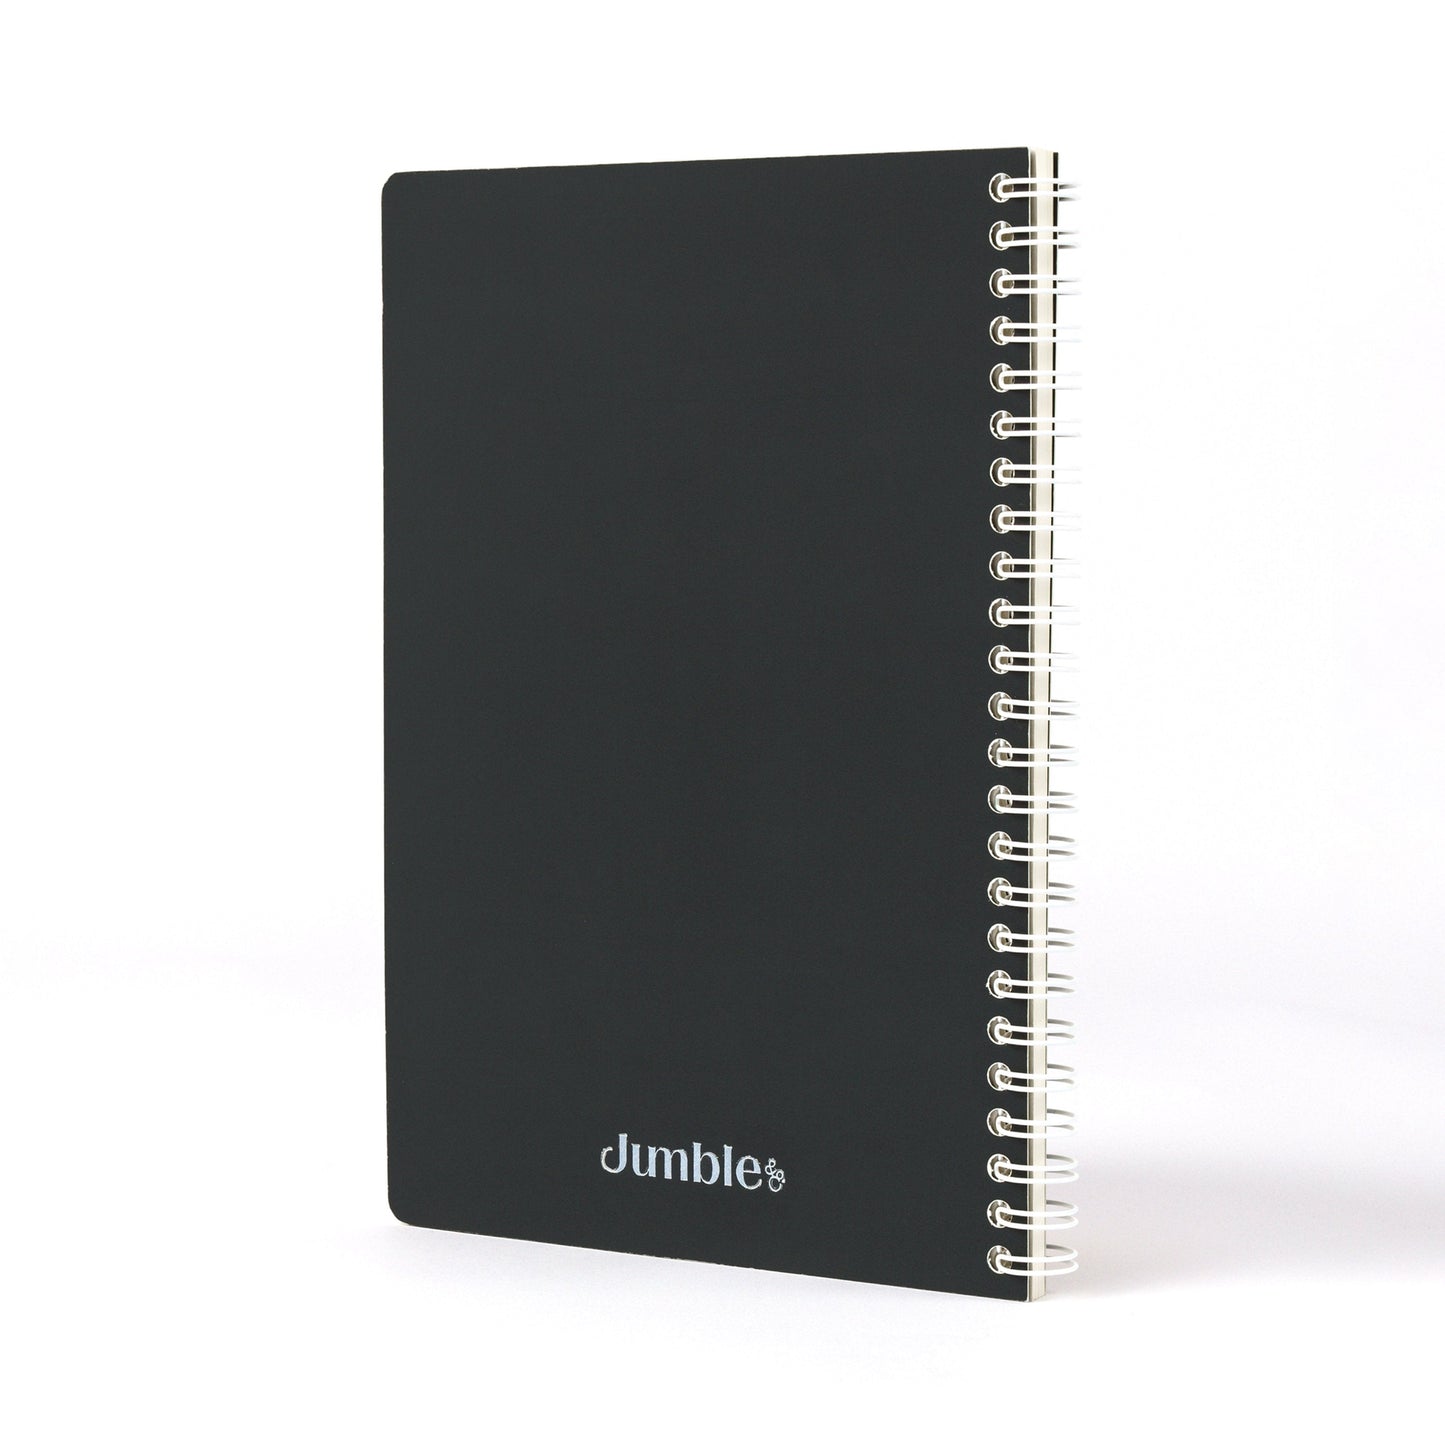 Convo Wiro Bound Ruled Notebook - Clean Slate Black